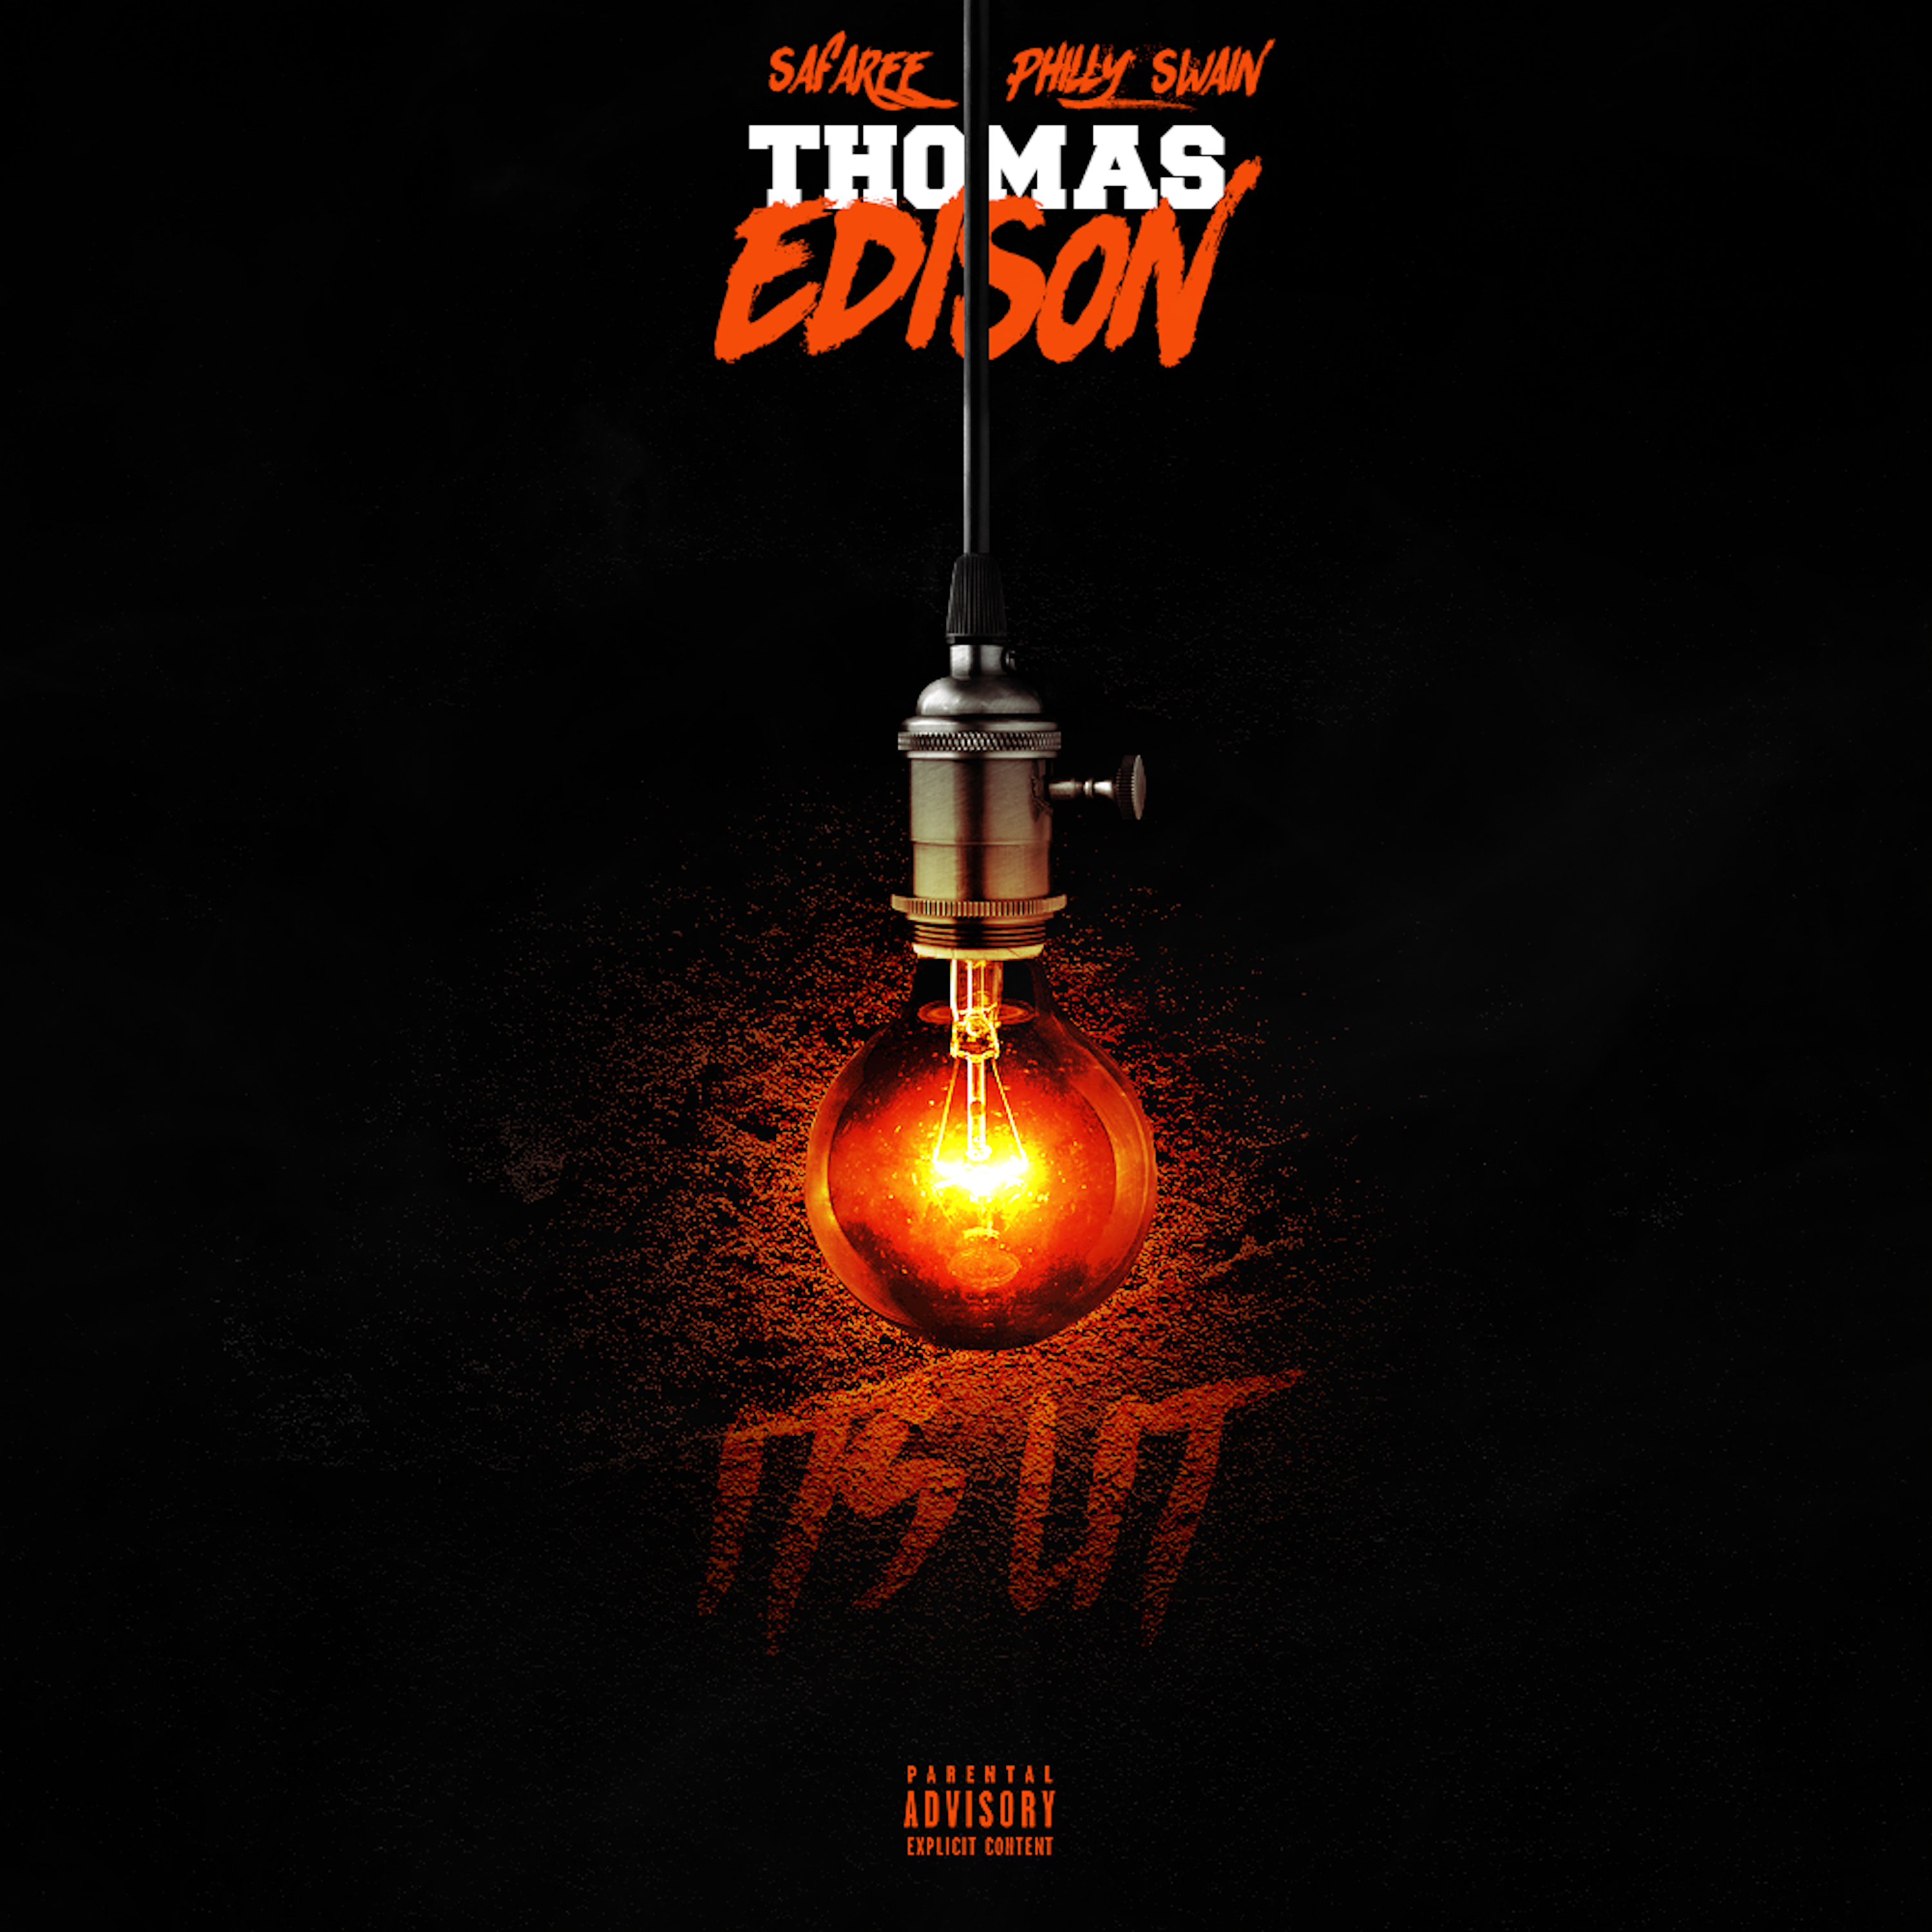 Thomas Edison (feat. Philly Swain)